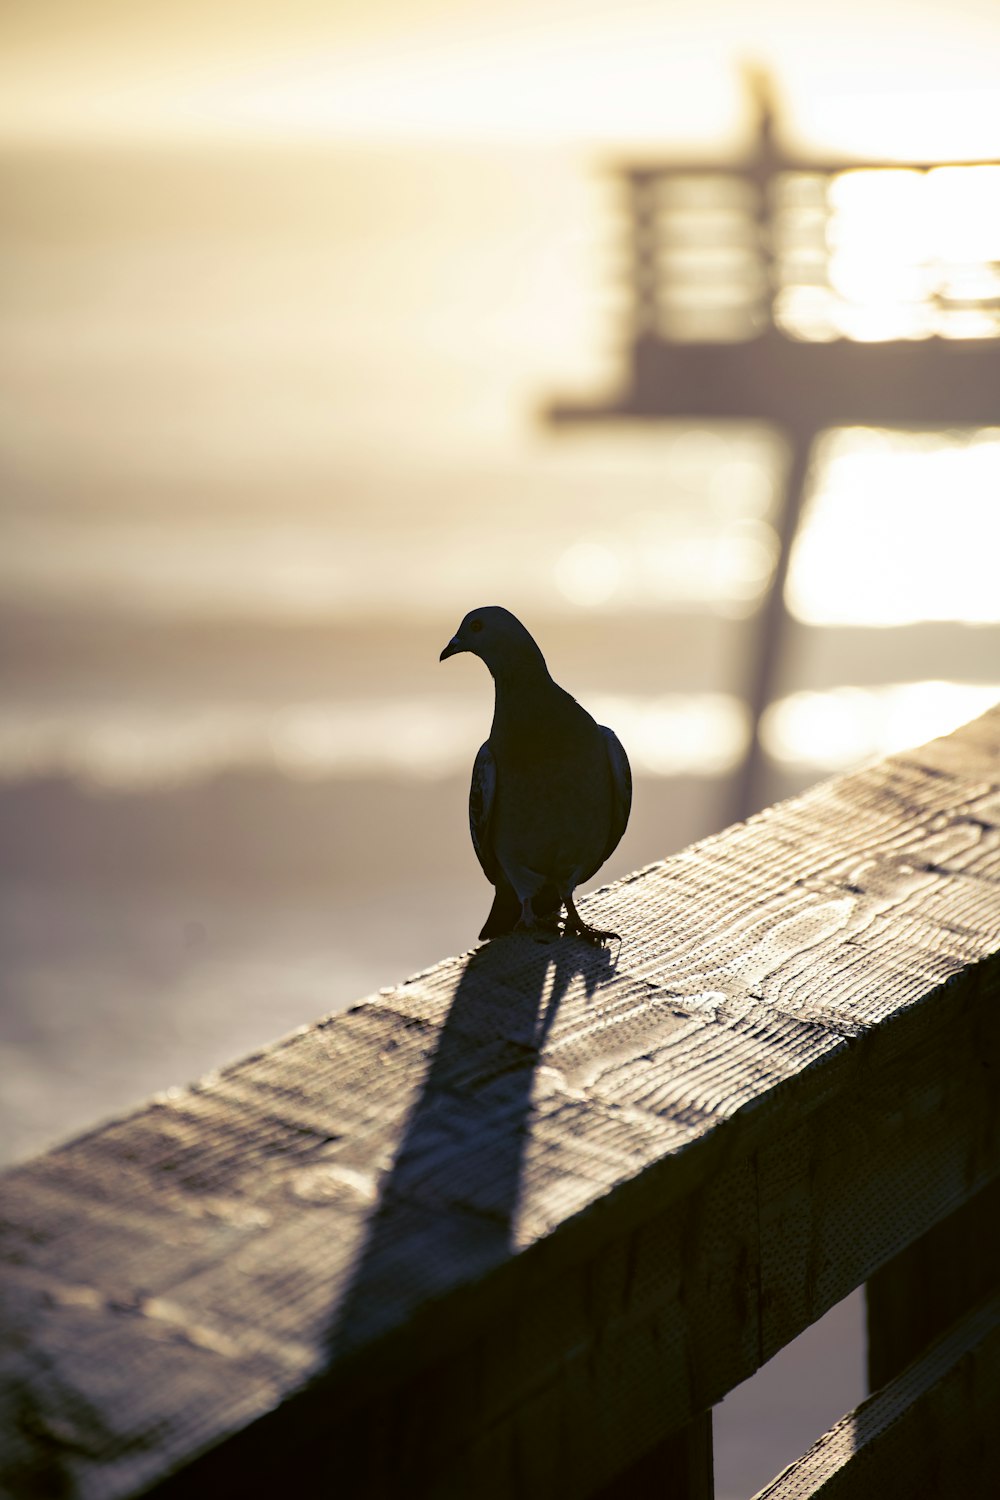 black bird on brown wooden fence during daytime